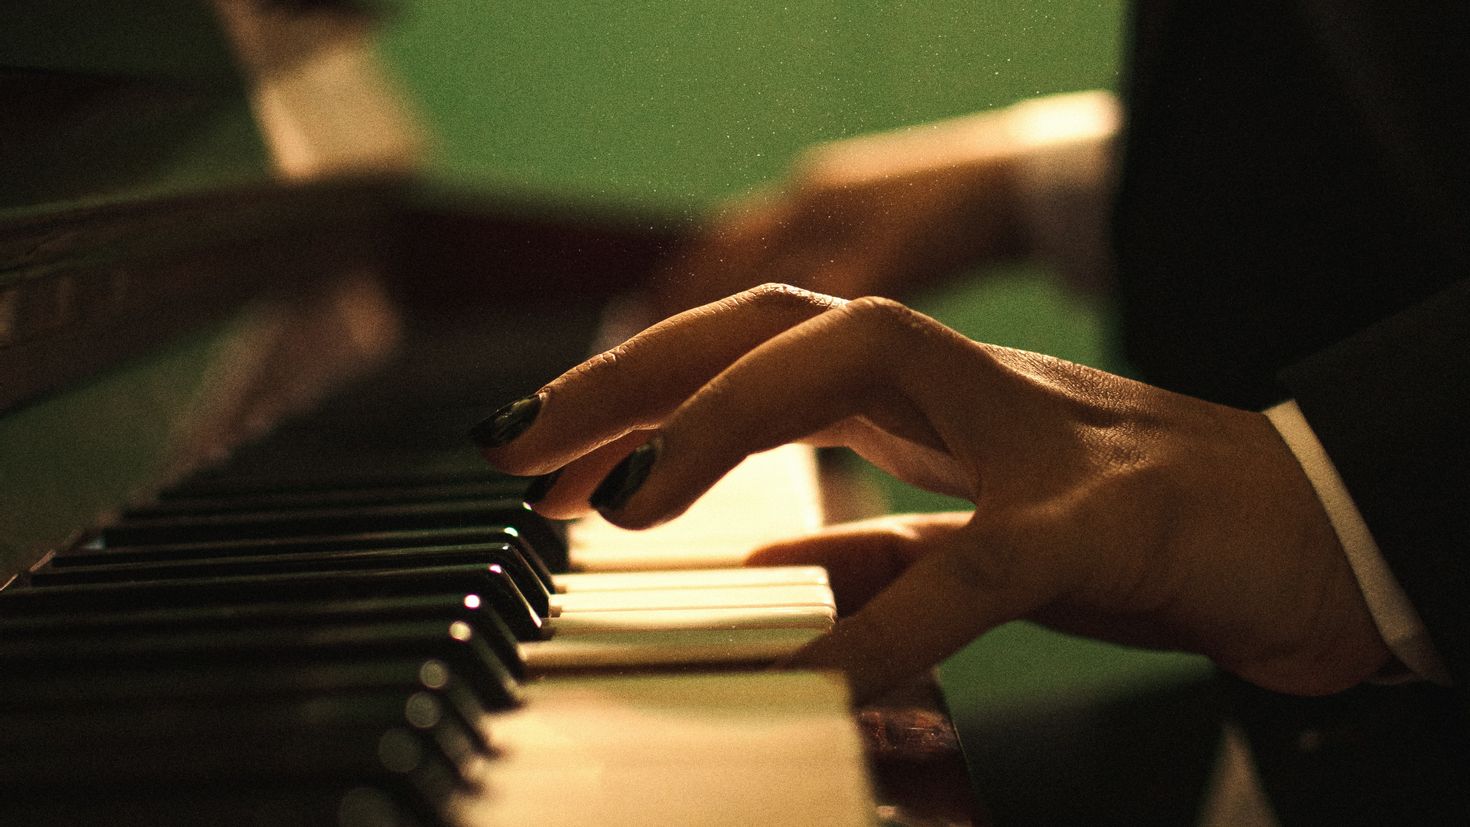 Мелодии на фортепиано слушать. Руки на фортепиано. Руки на клавишах пианино. Руки на пианино. Обои на рабочий стол пианино.